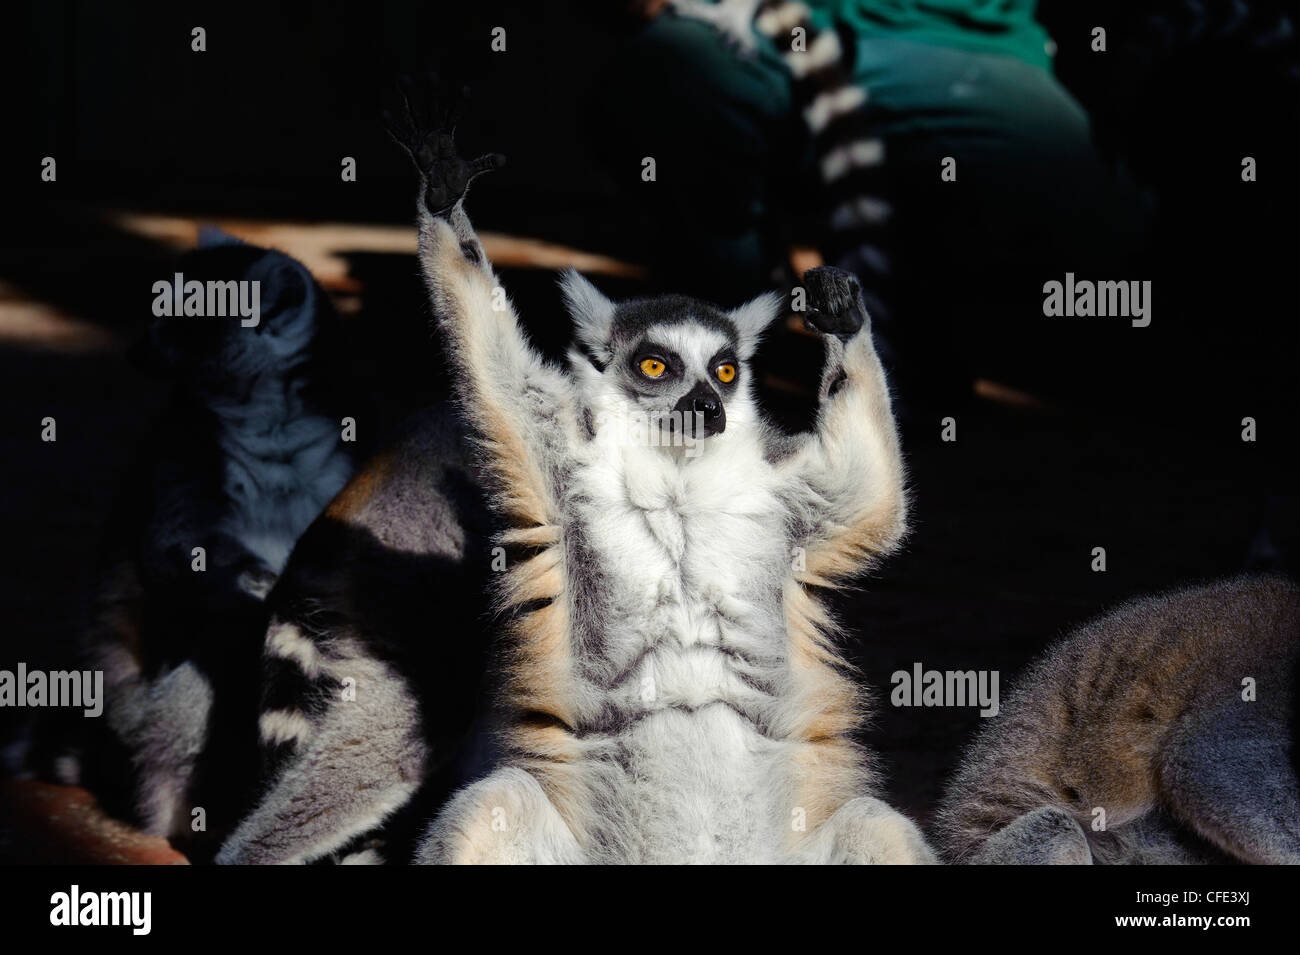 ring-tailed lemur (Lemur catta) in the Tropariumin Tierpark Hagenbeck, Hamburg Germany Stock Photo